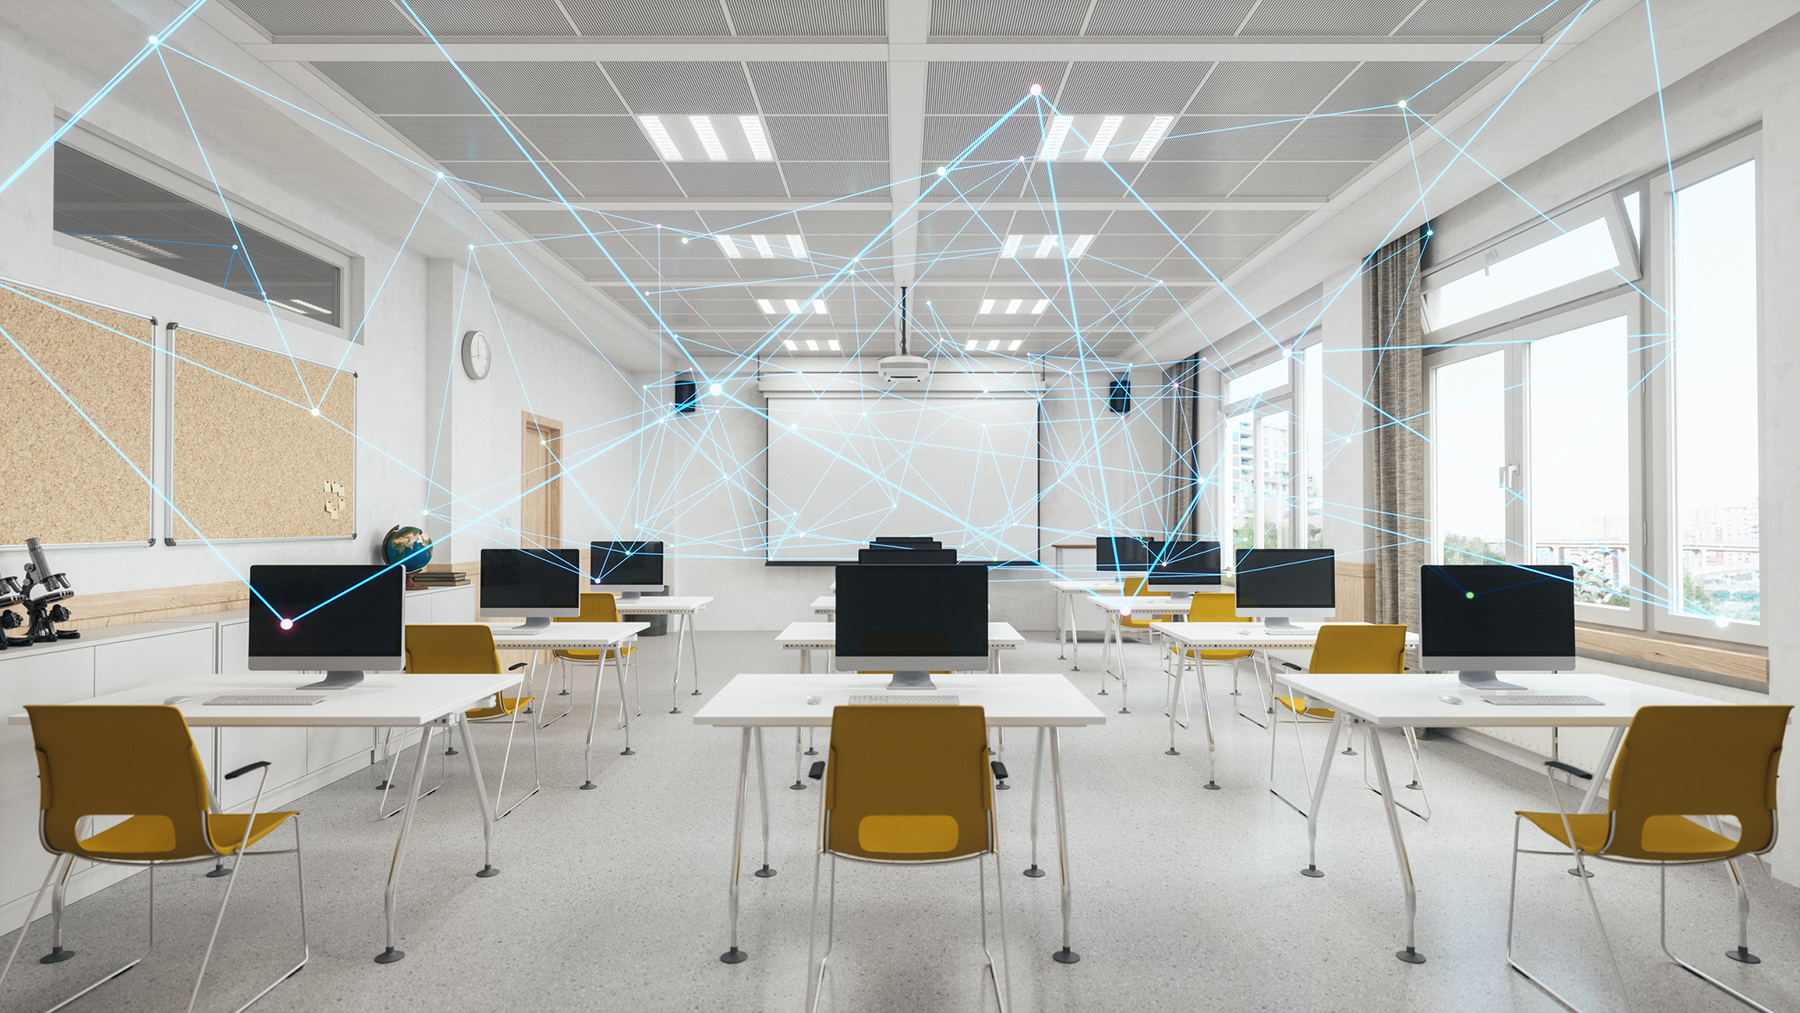 Classroom with AI illustration overlay